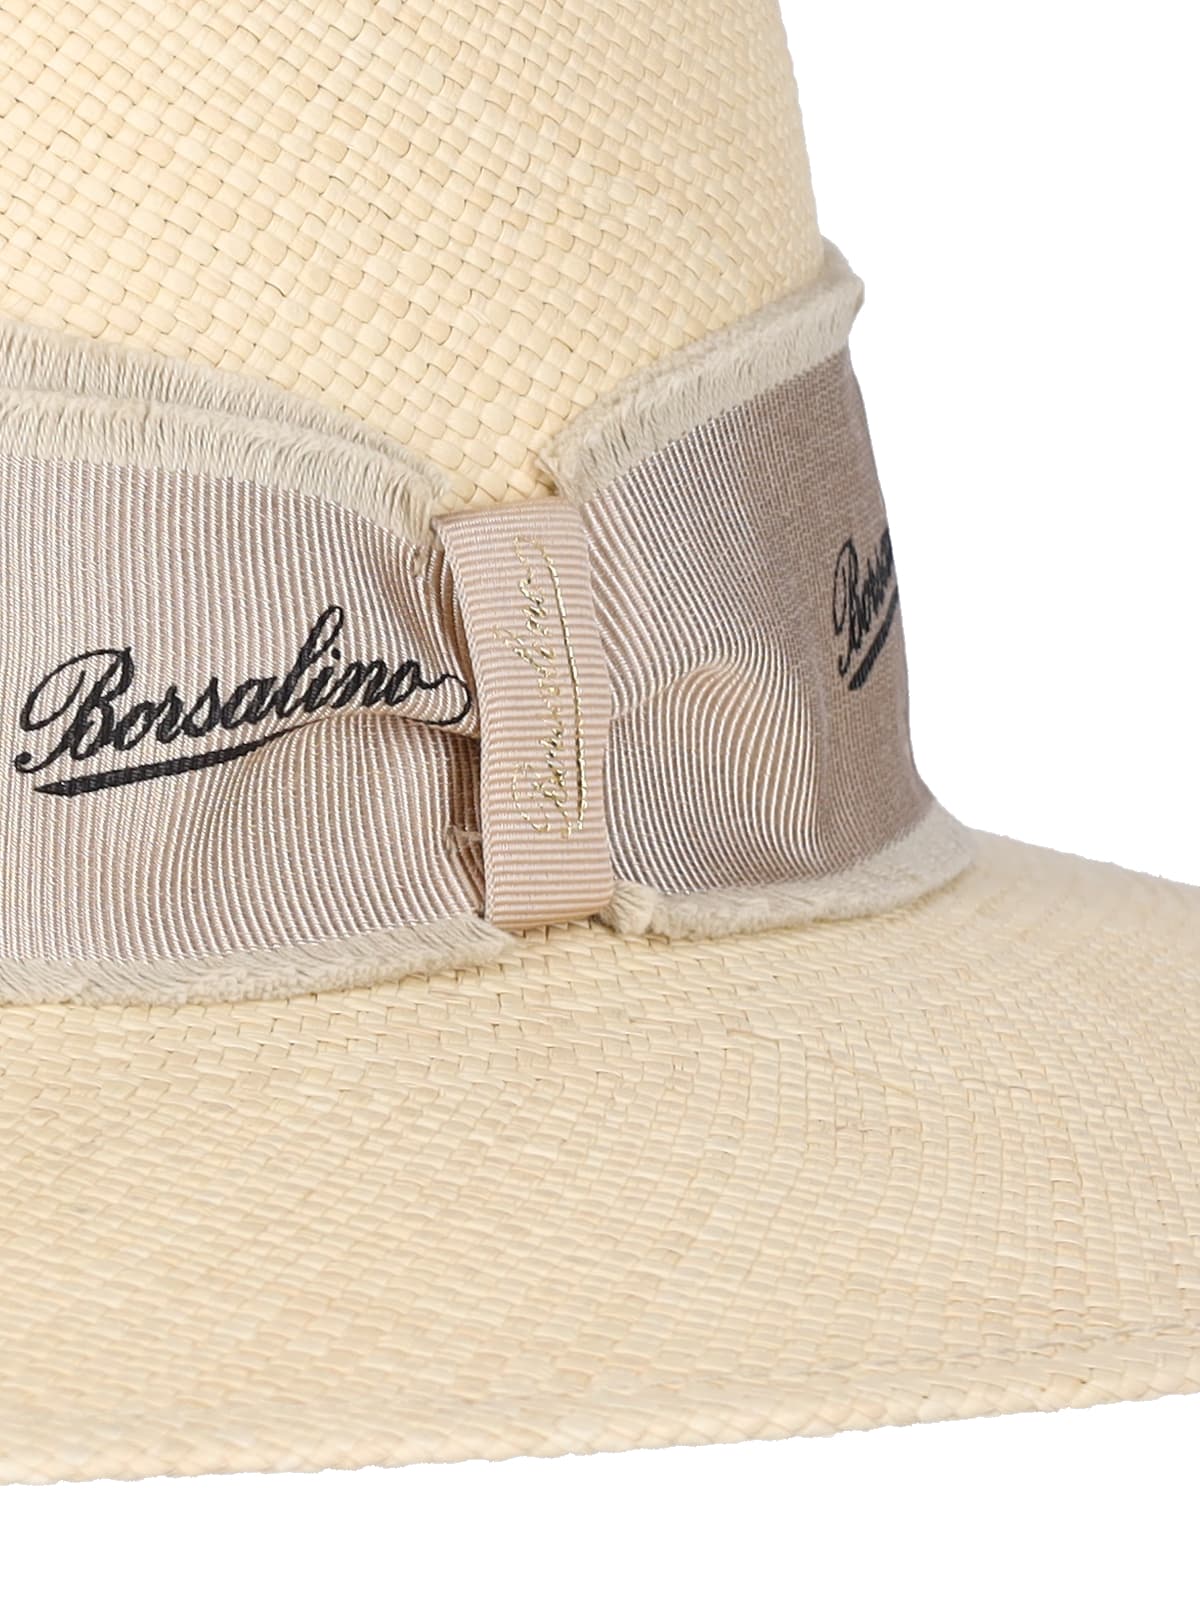 Borsalino Logo Straw Hat In Beige